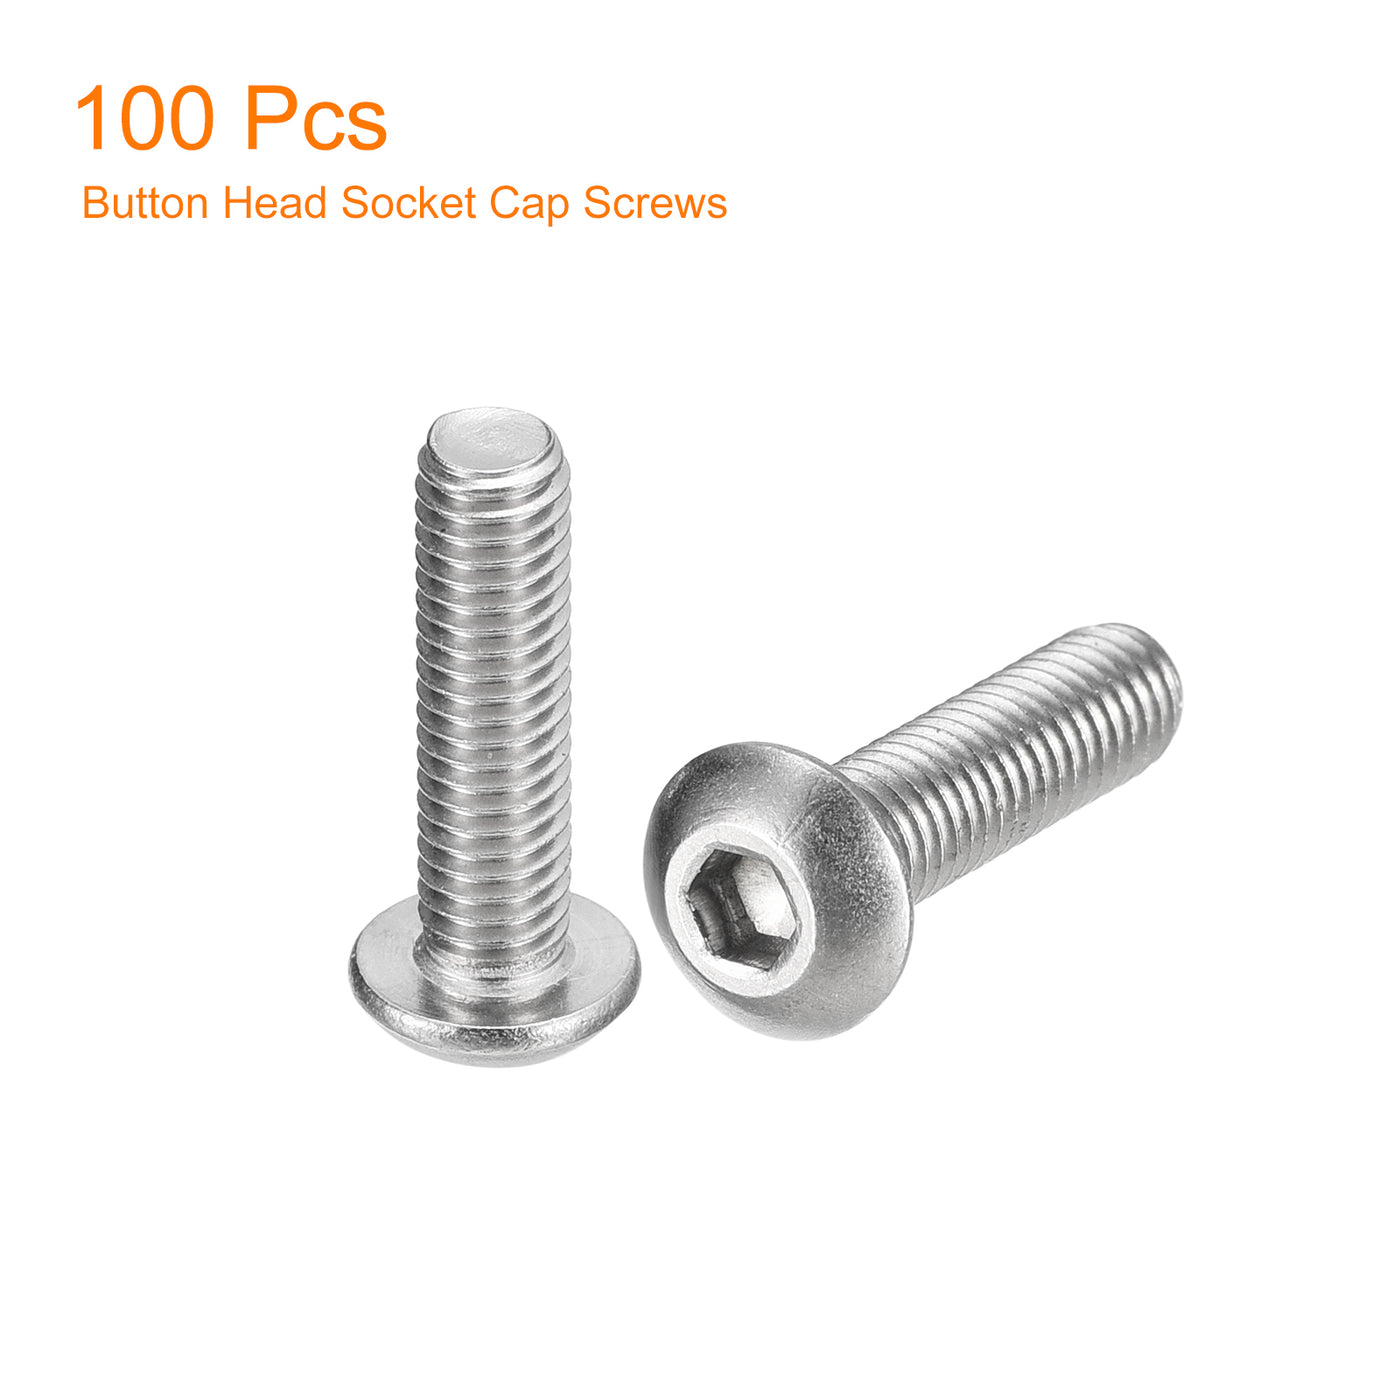 uxcell Uxcell #10-32x3/4" Button Head Socket Cap Screws, 100pcs 304 Stainless Steel Screws